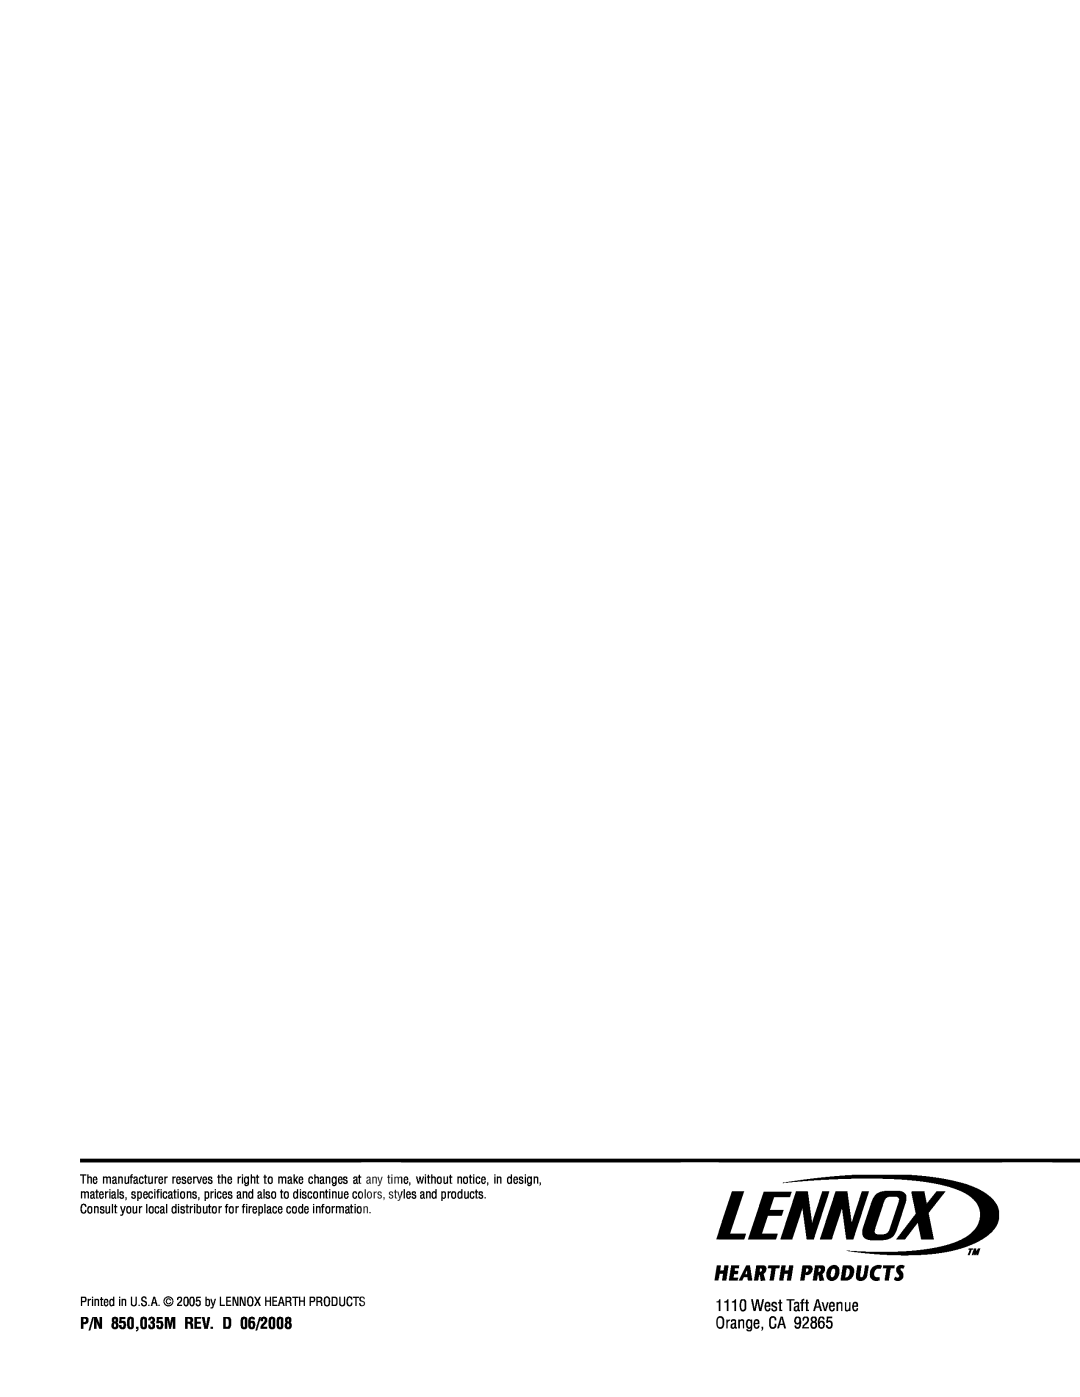 Lennox Hearth MPE-27 warranty P/N 850,035M REV. D 06/2008, West Taft Avenue Orange, CA 